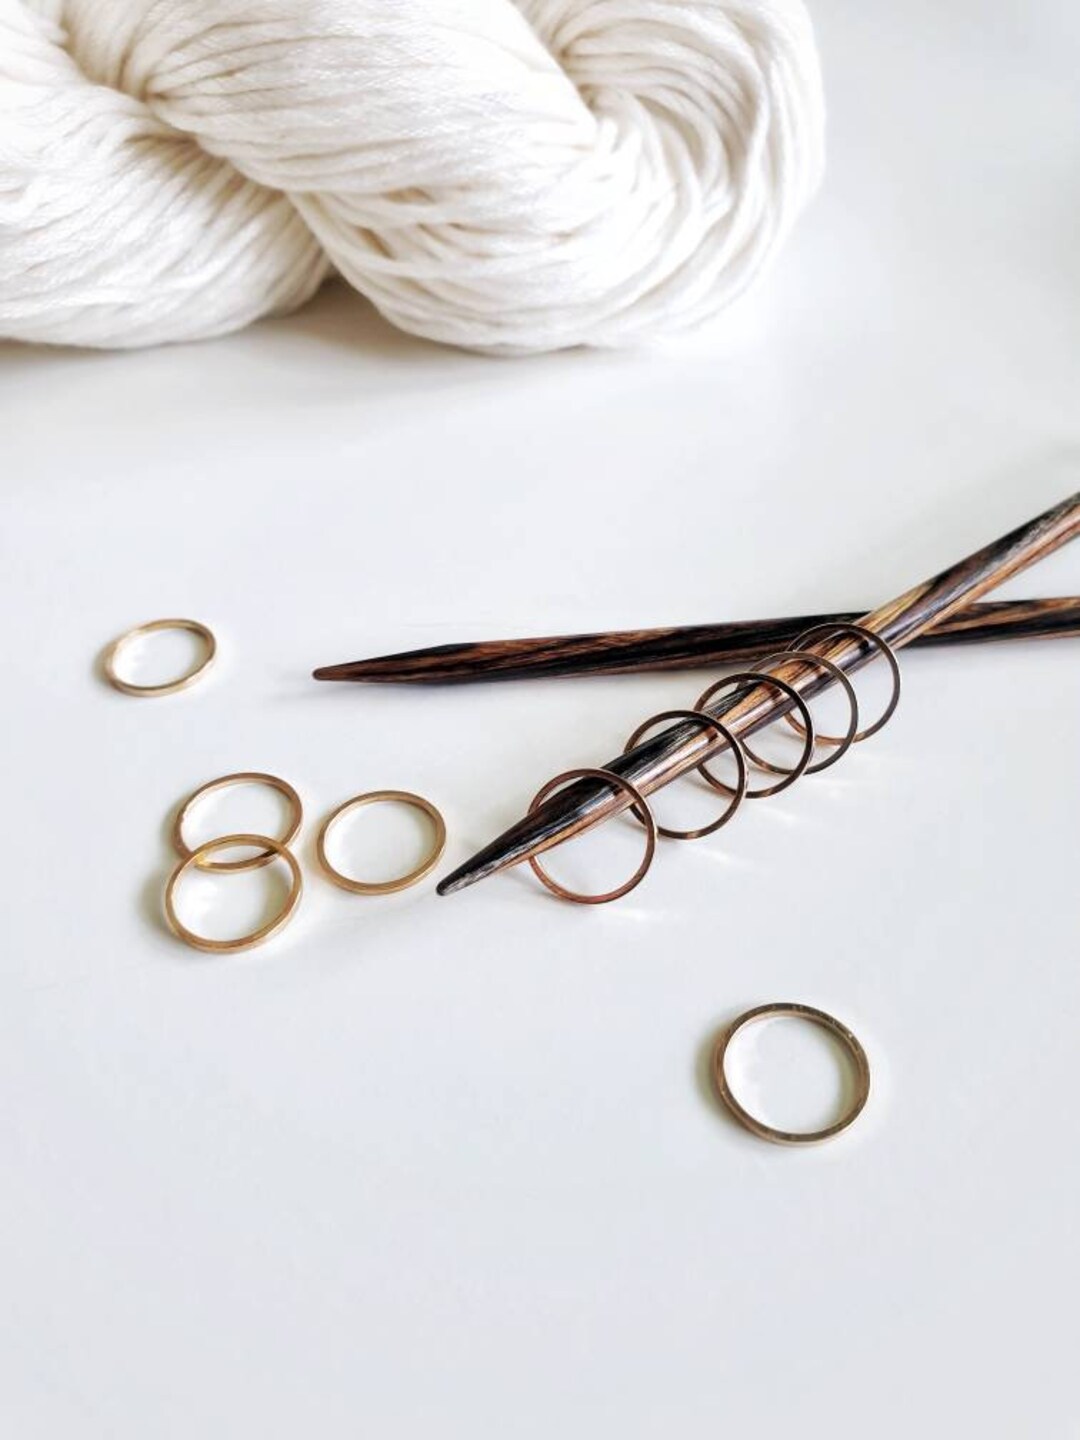 Seafoam Stitch Markers Knitting Needles Closed Ring Snag Free